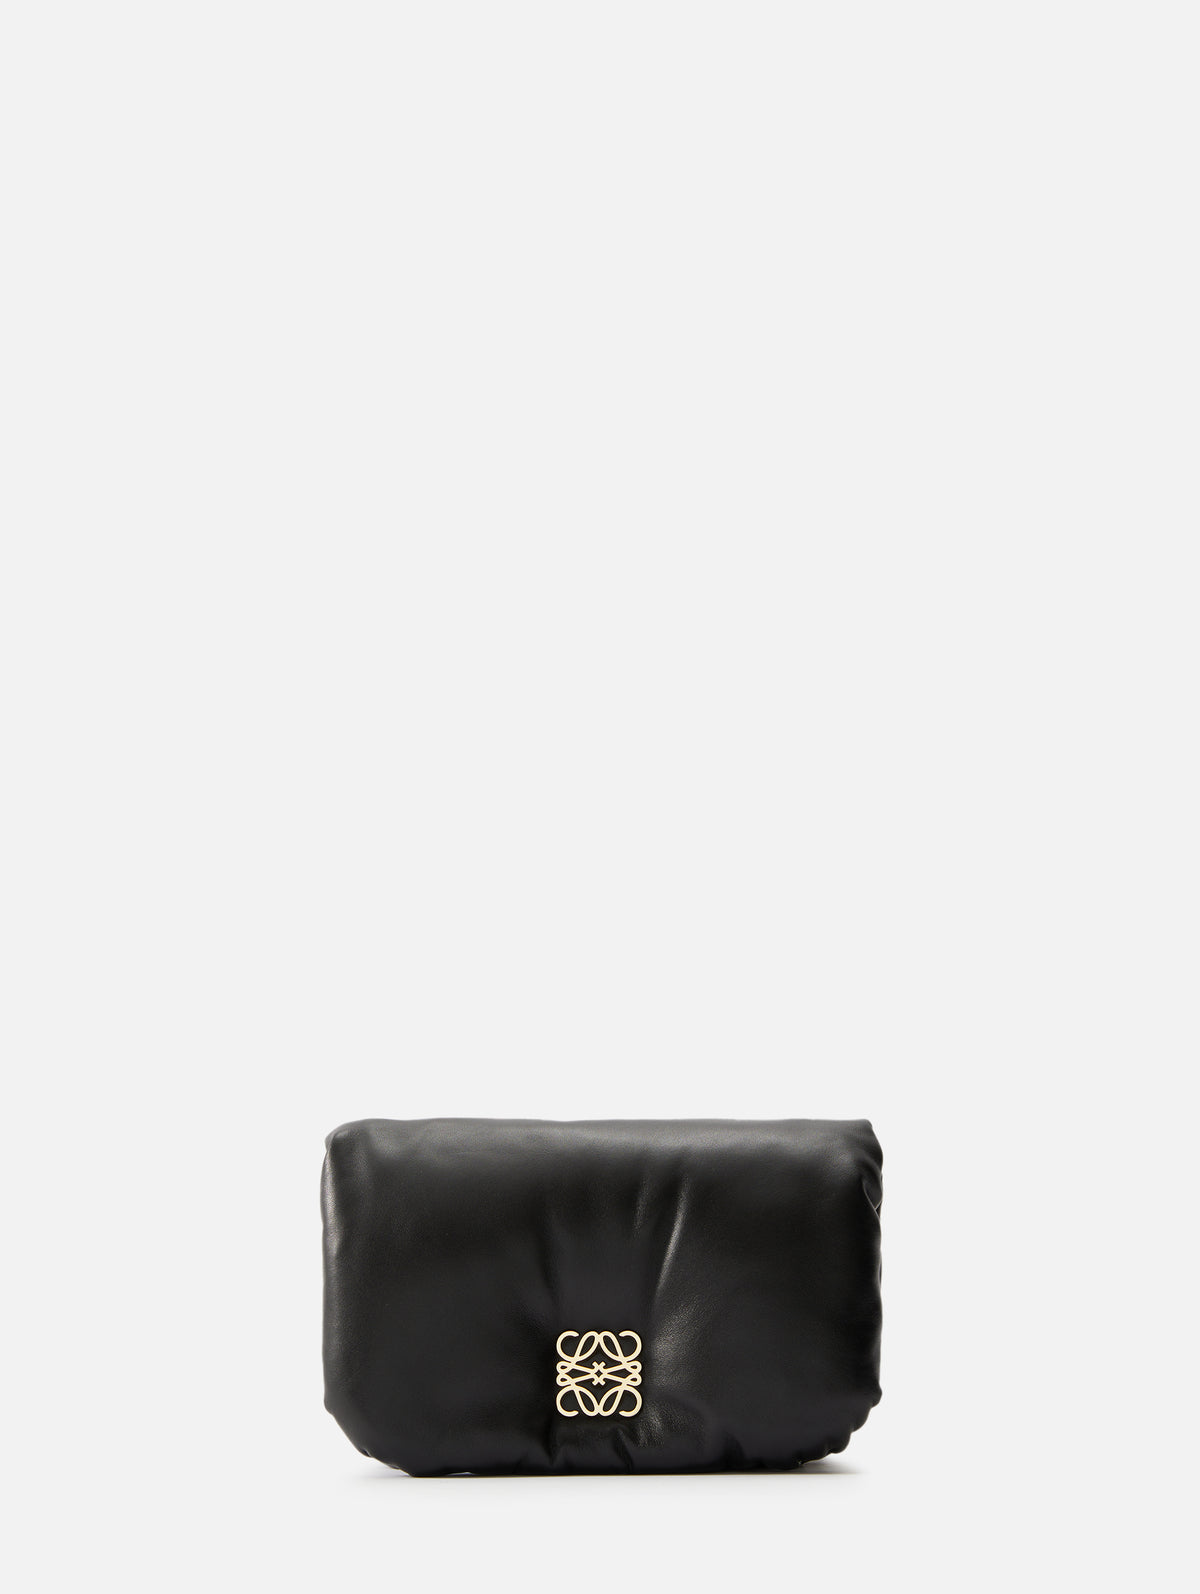 Goya Puffer Mini Shoulder Bag in Black - Loewe